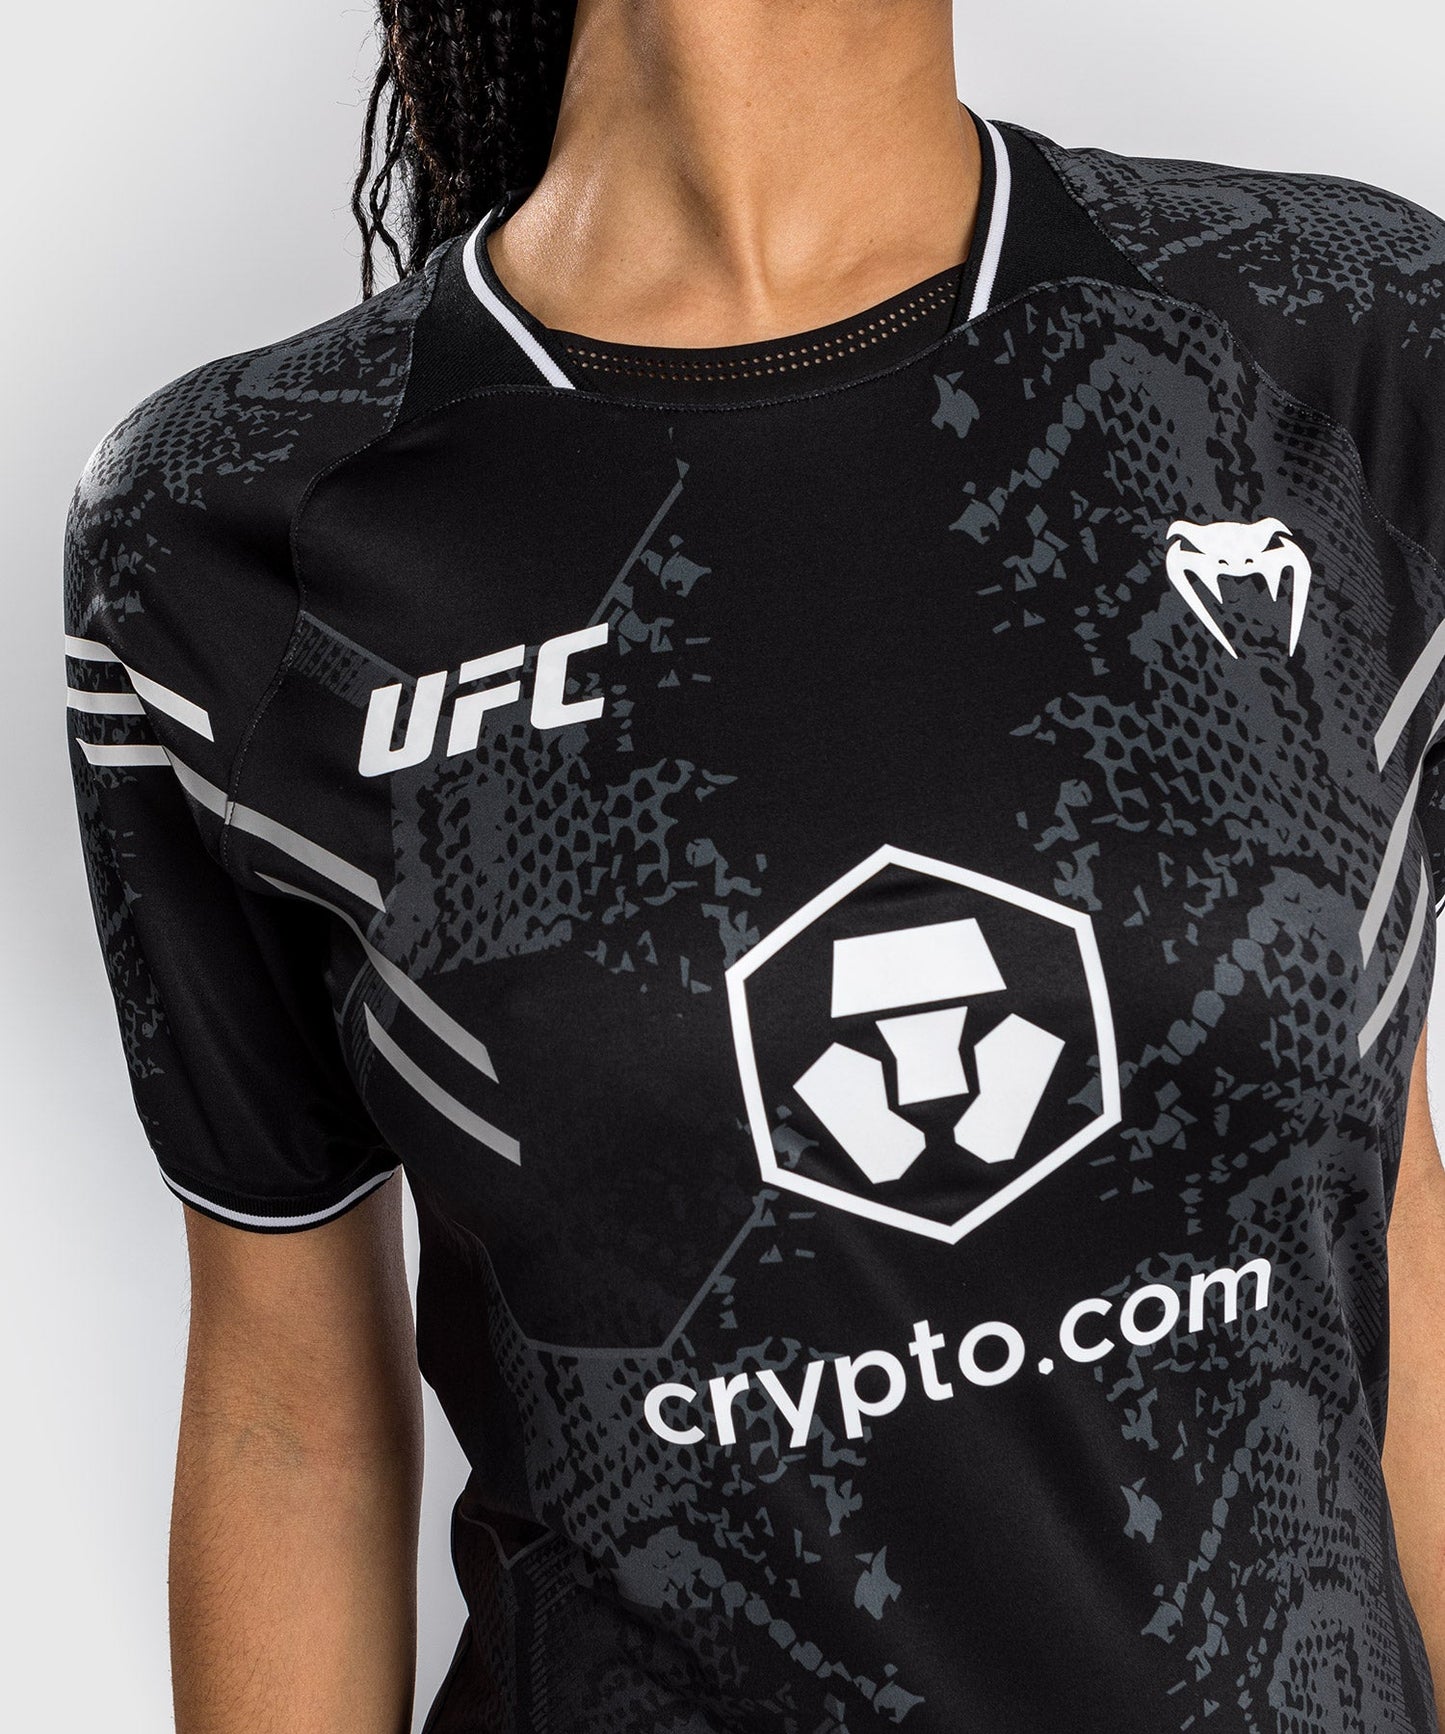 UFC Adrenaline by Venum Authentic Fight Night Camiseta Dry Tech Personalizado para Mujer - Negro